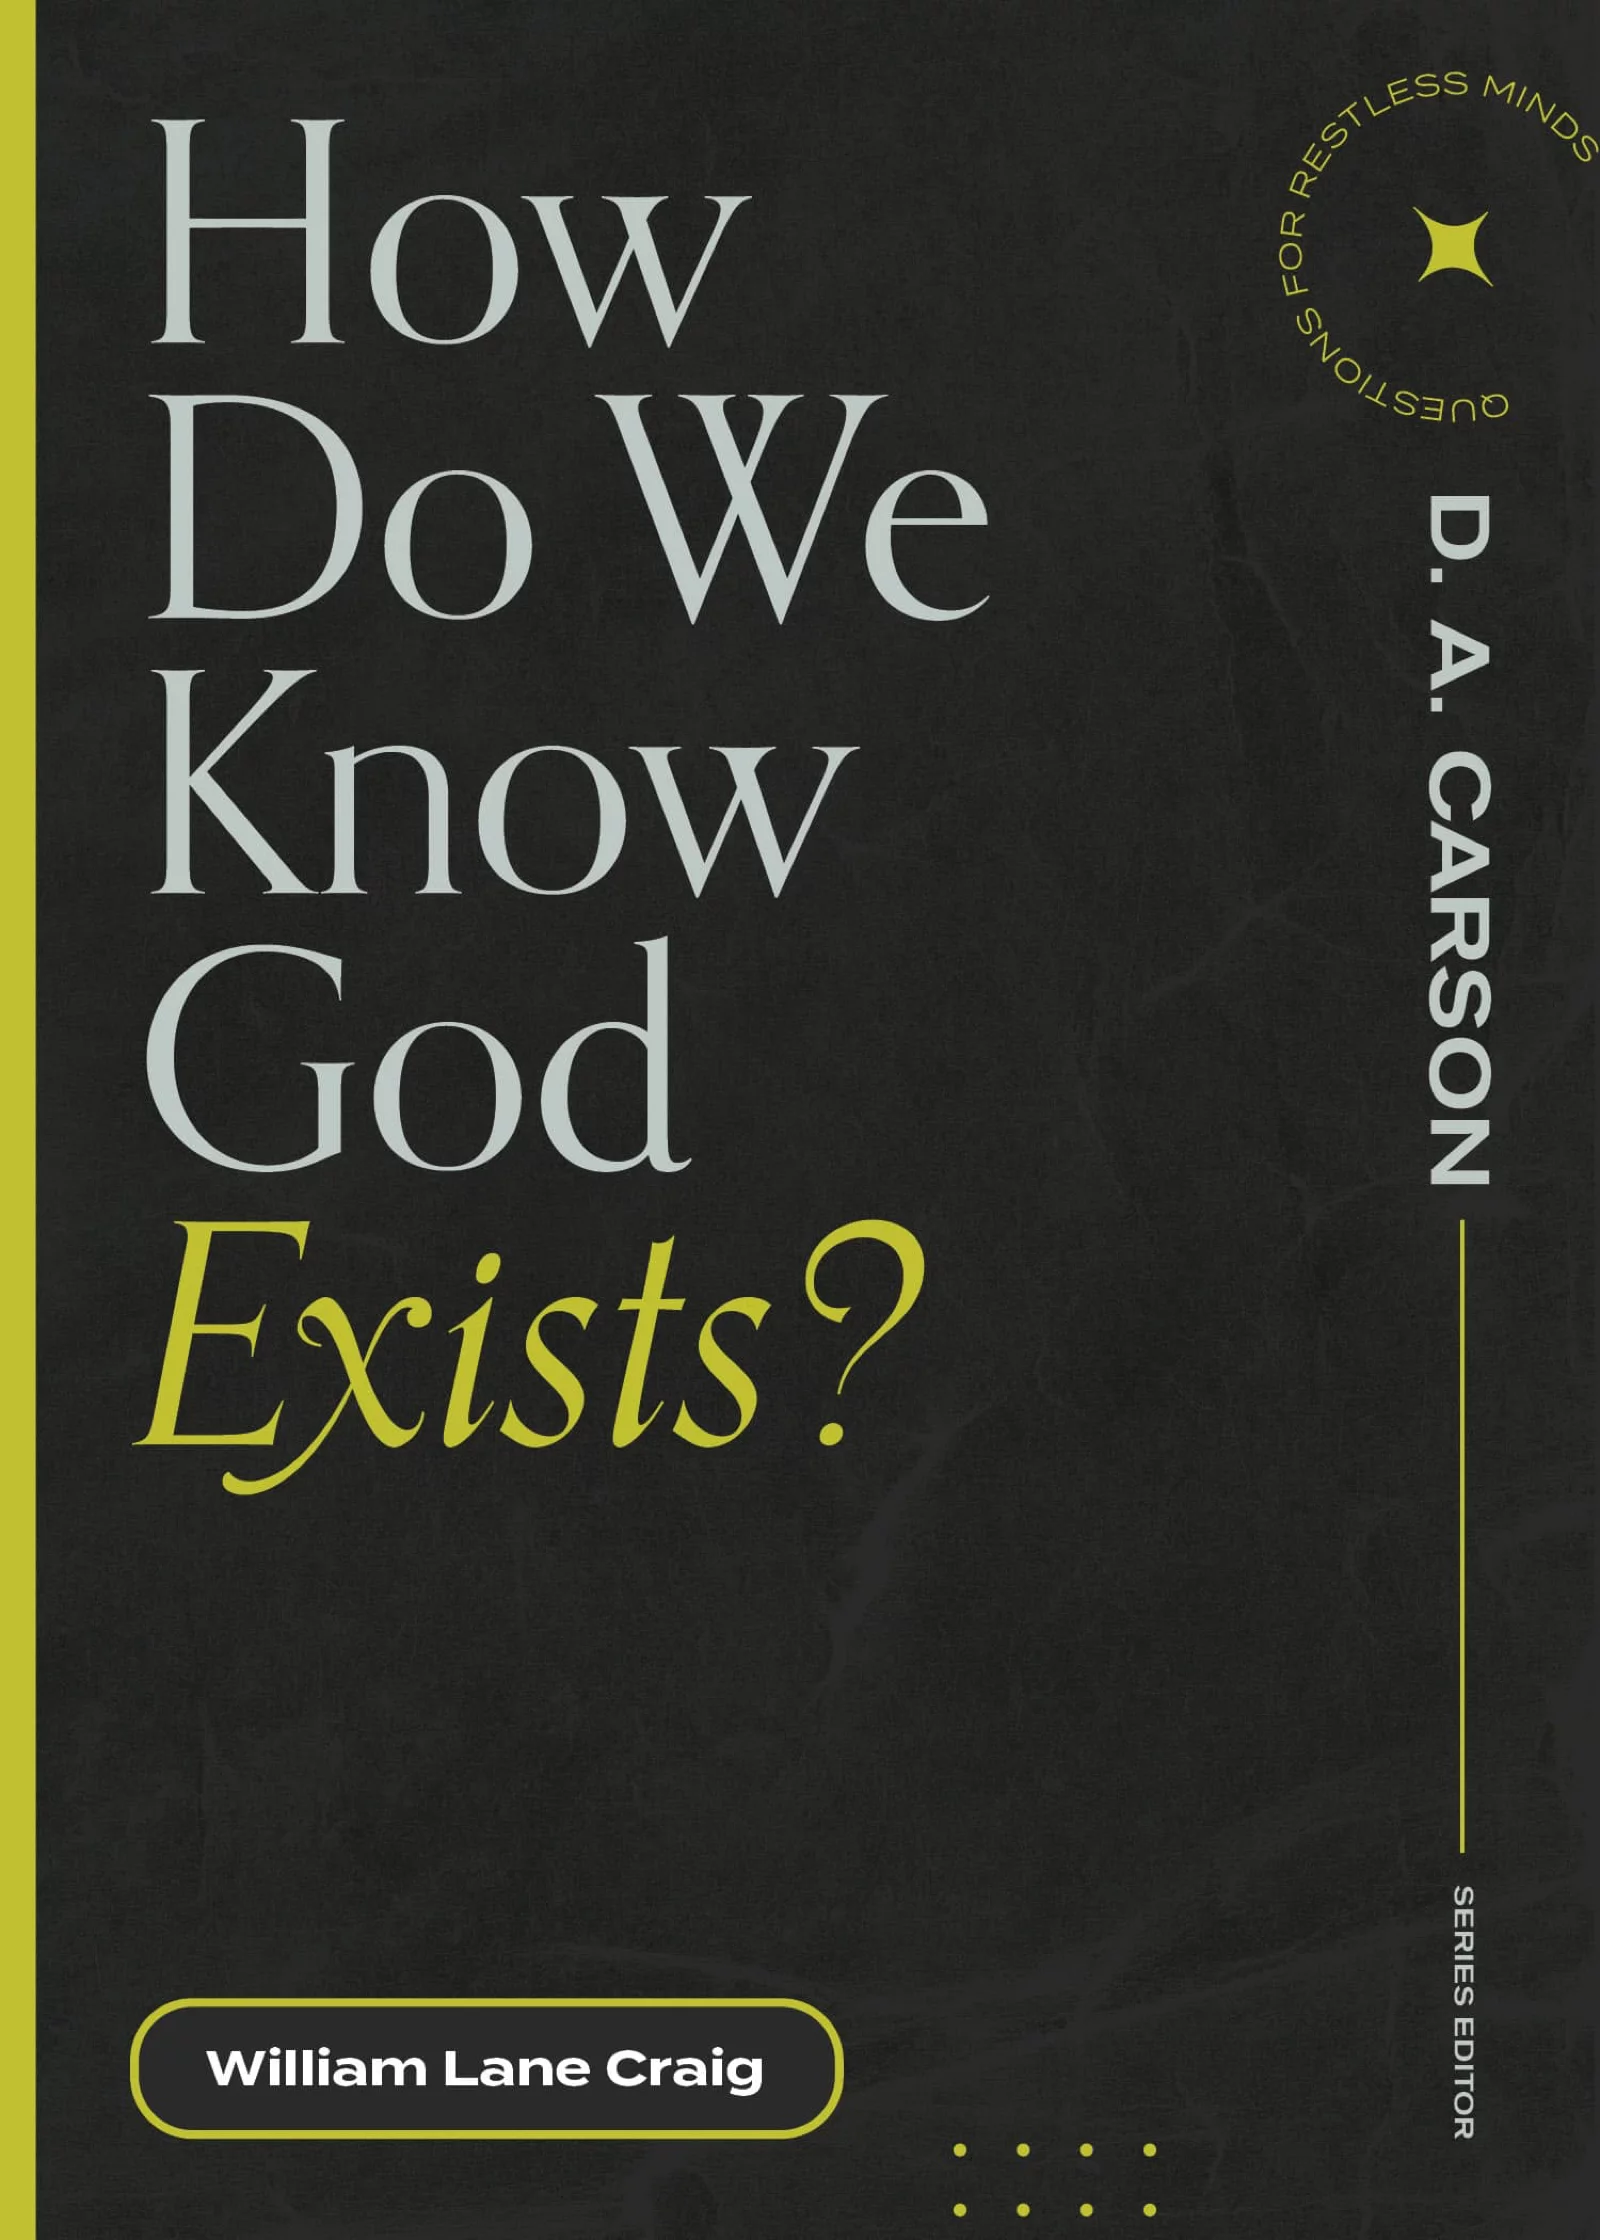  2022/08/How-do-we-know-God-exists.webp 